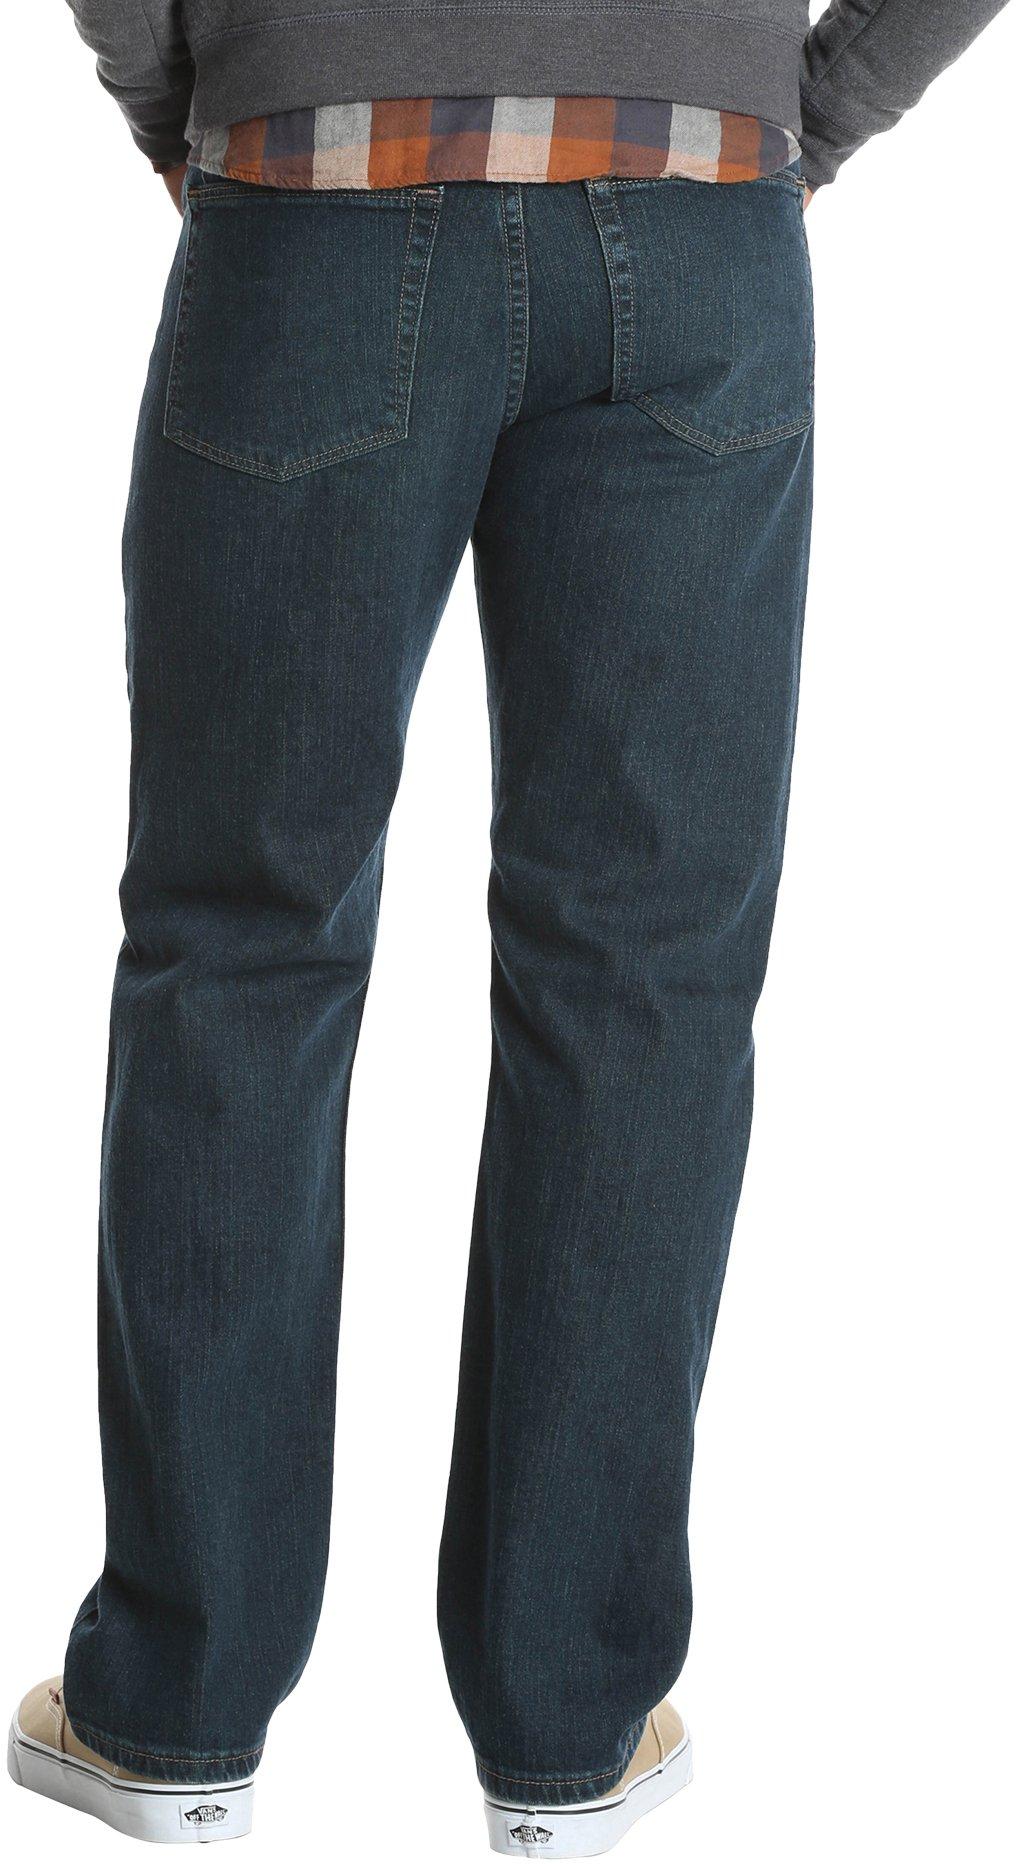 Wrangler Mens Comfort Flex Denim Regular Fit Jeans - image 2 of 2